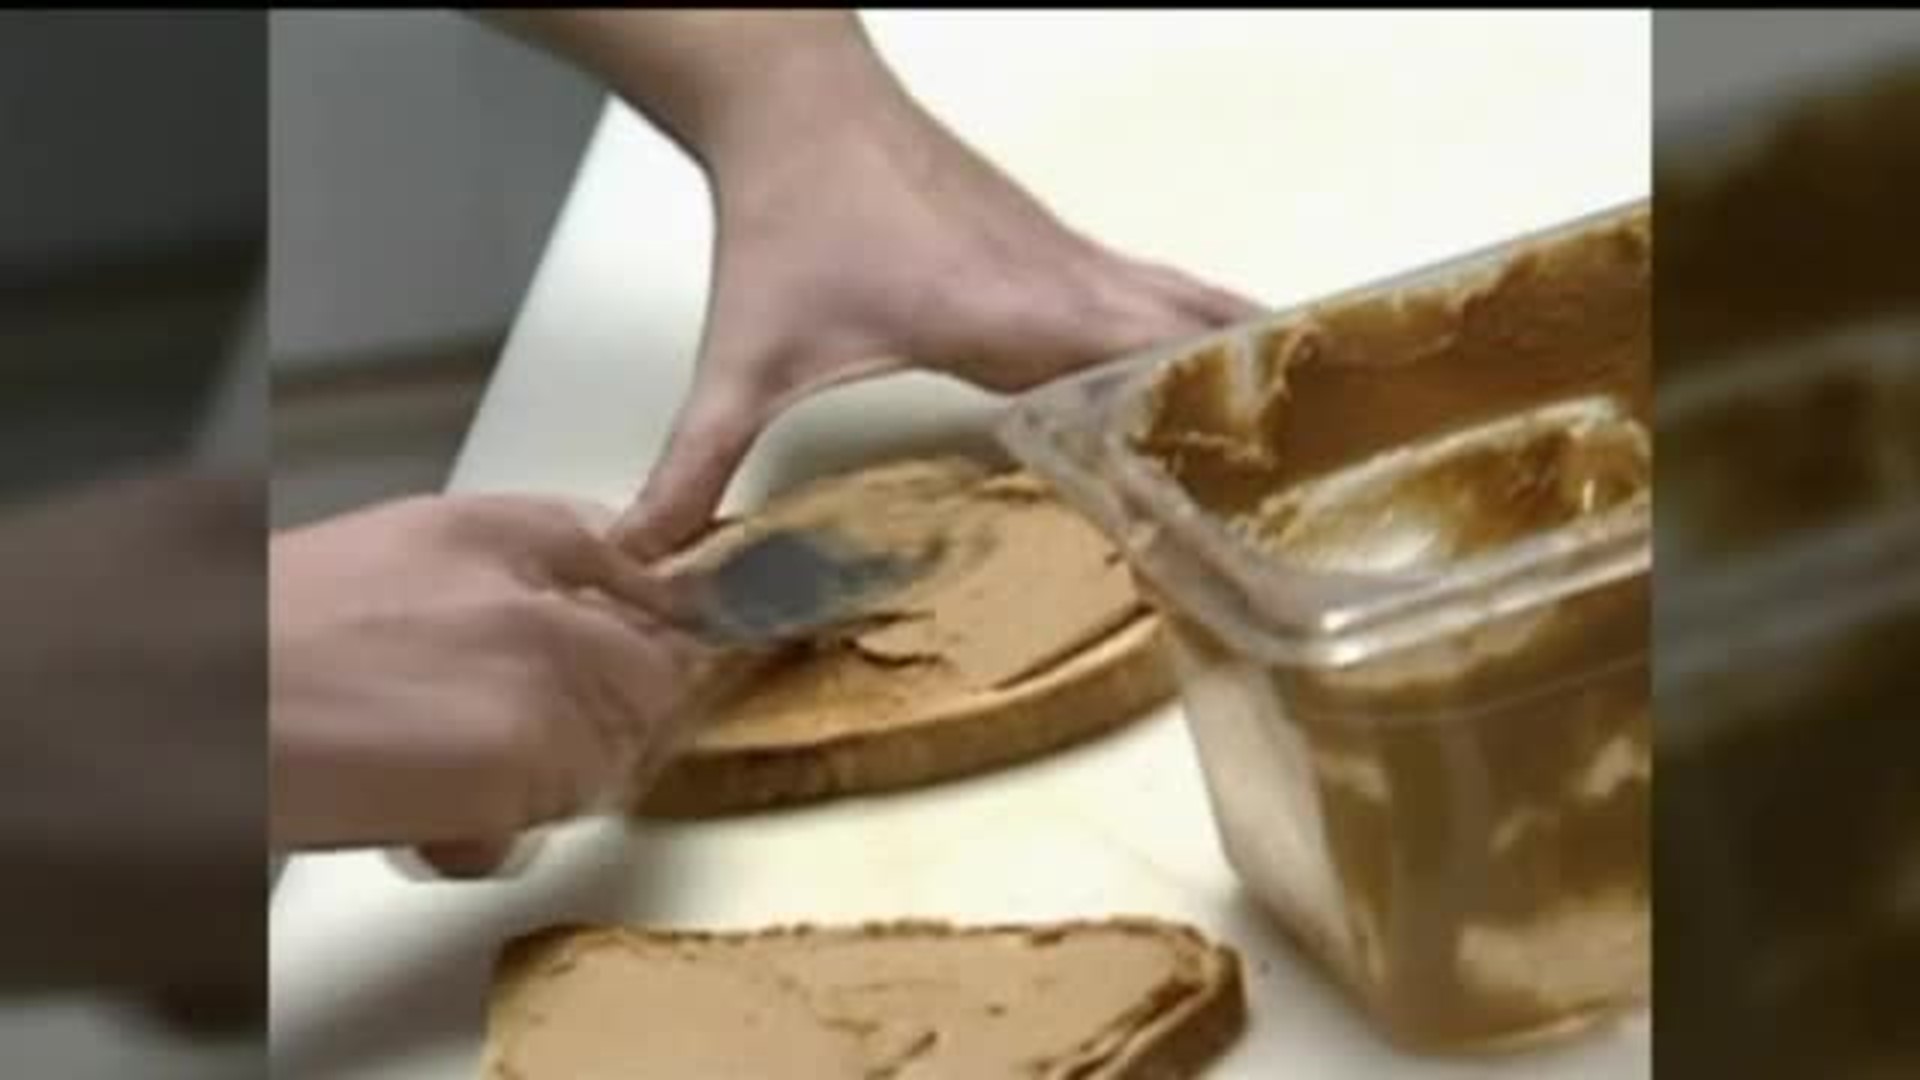 Several varieties of peanut butter recalled